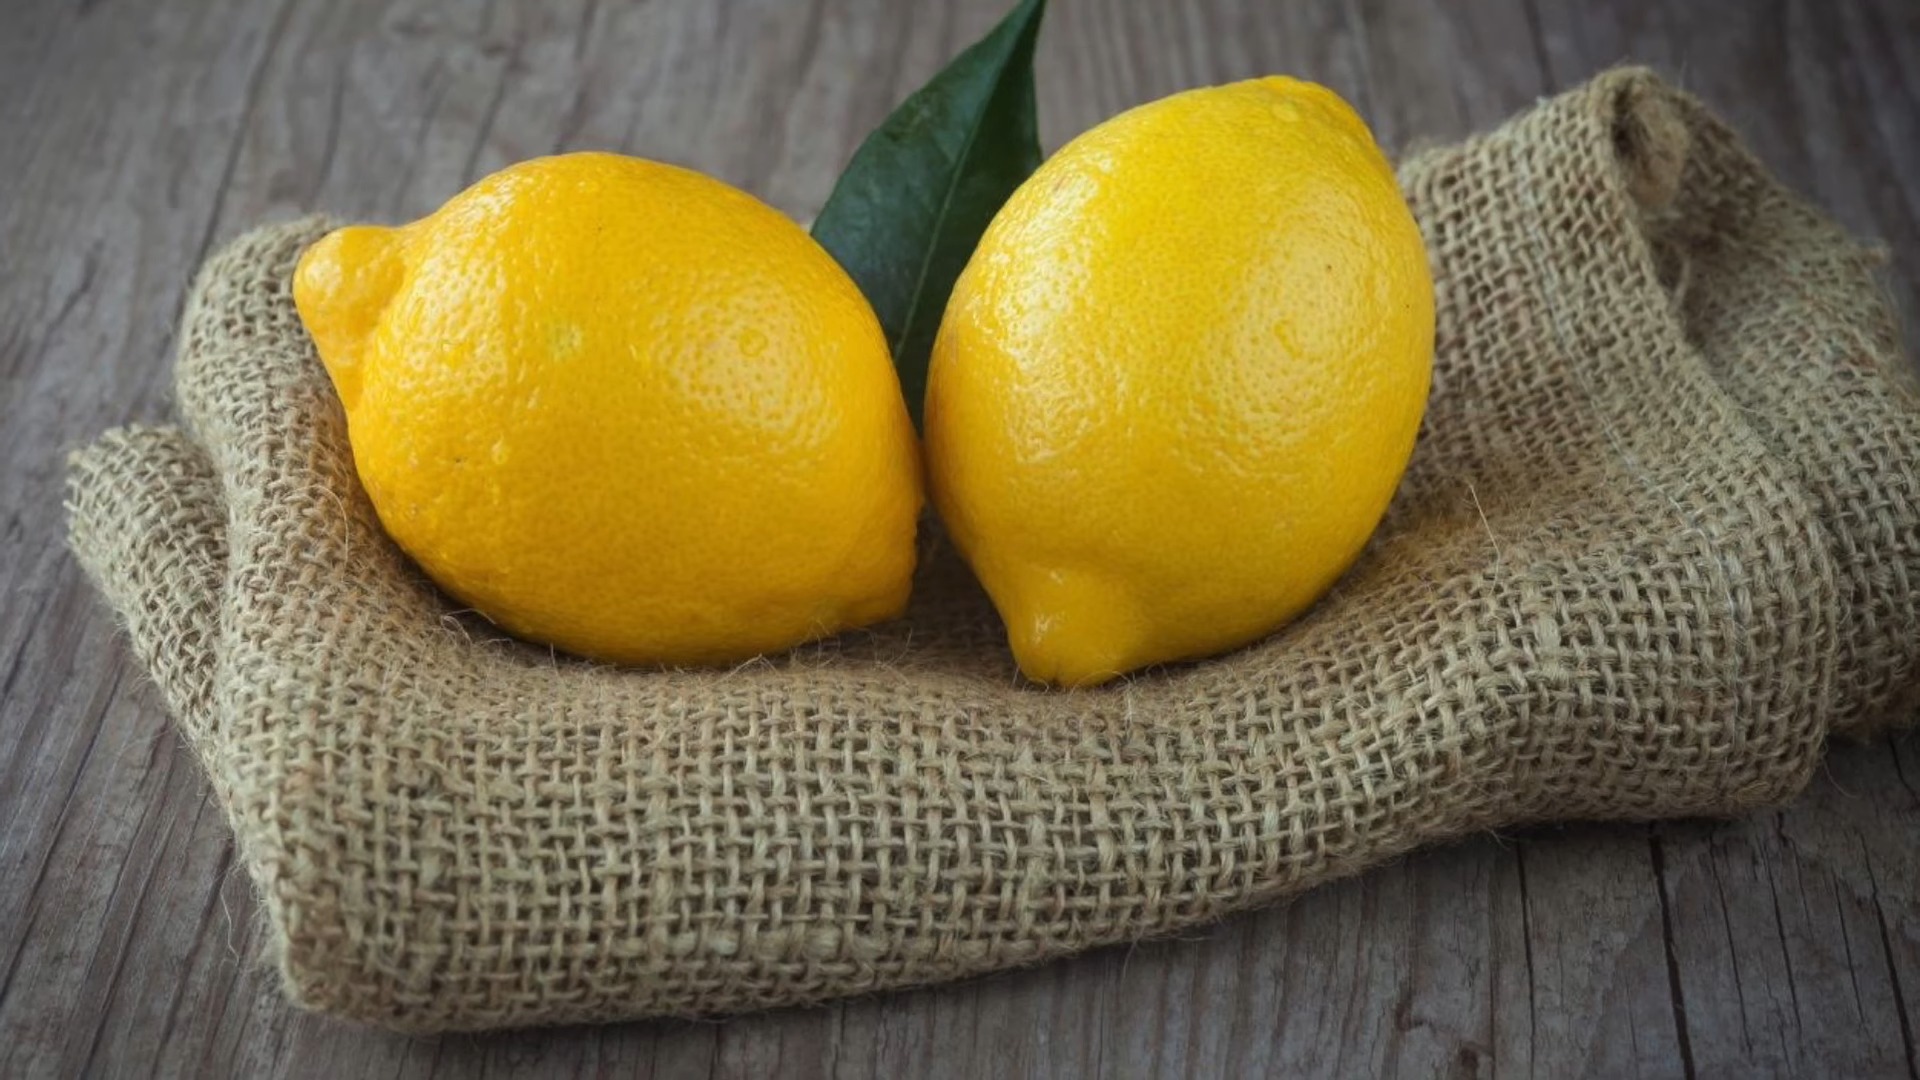 Lemon and Skin Health